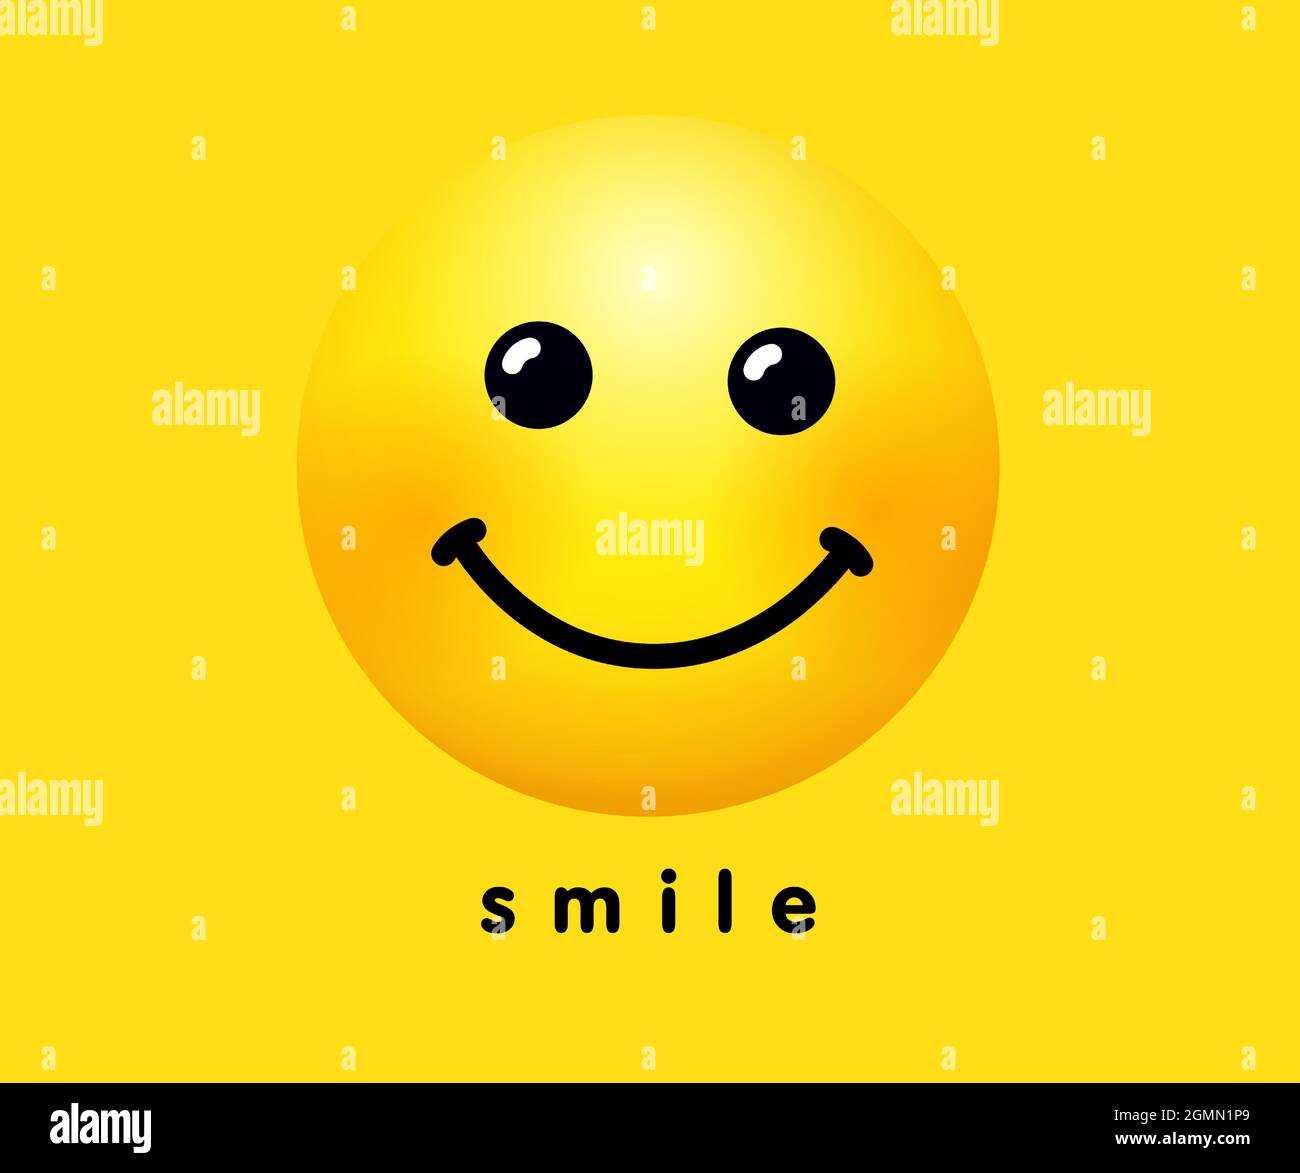 Smile icon, holiday banner design. Smiling emoticon vector logo on ...